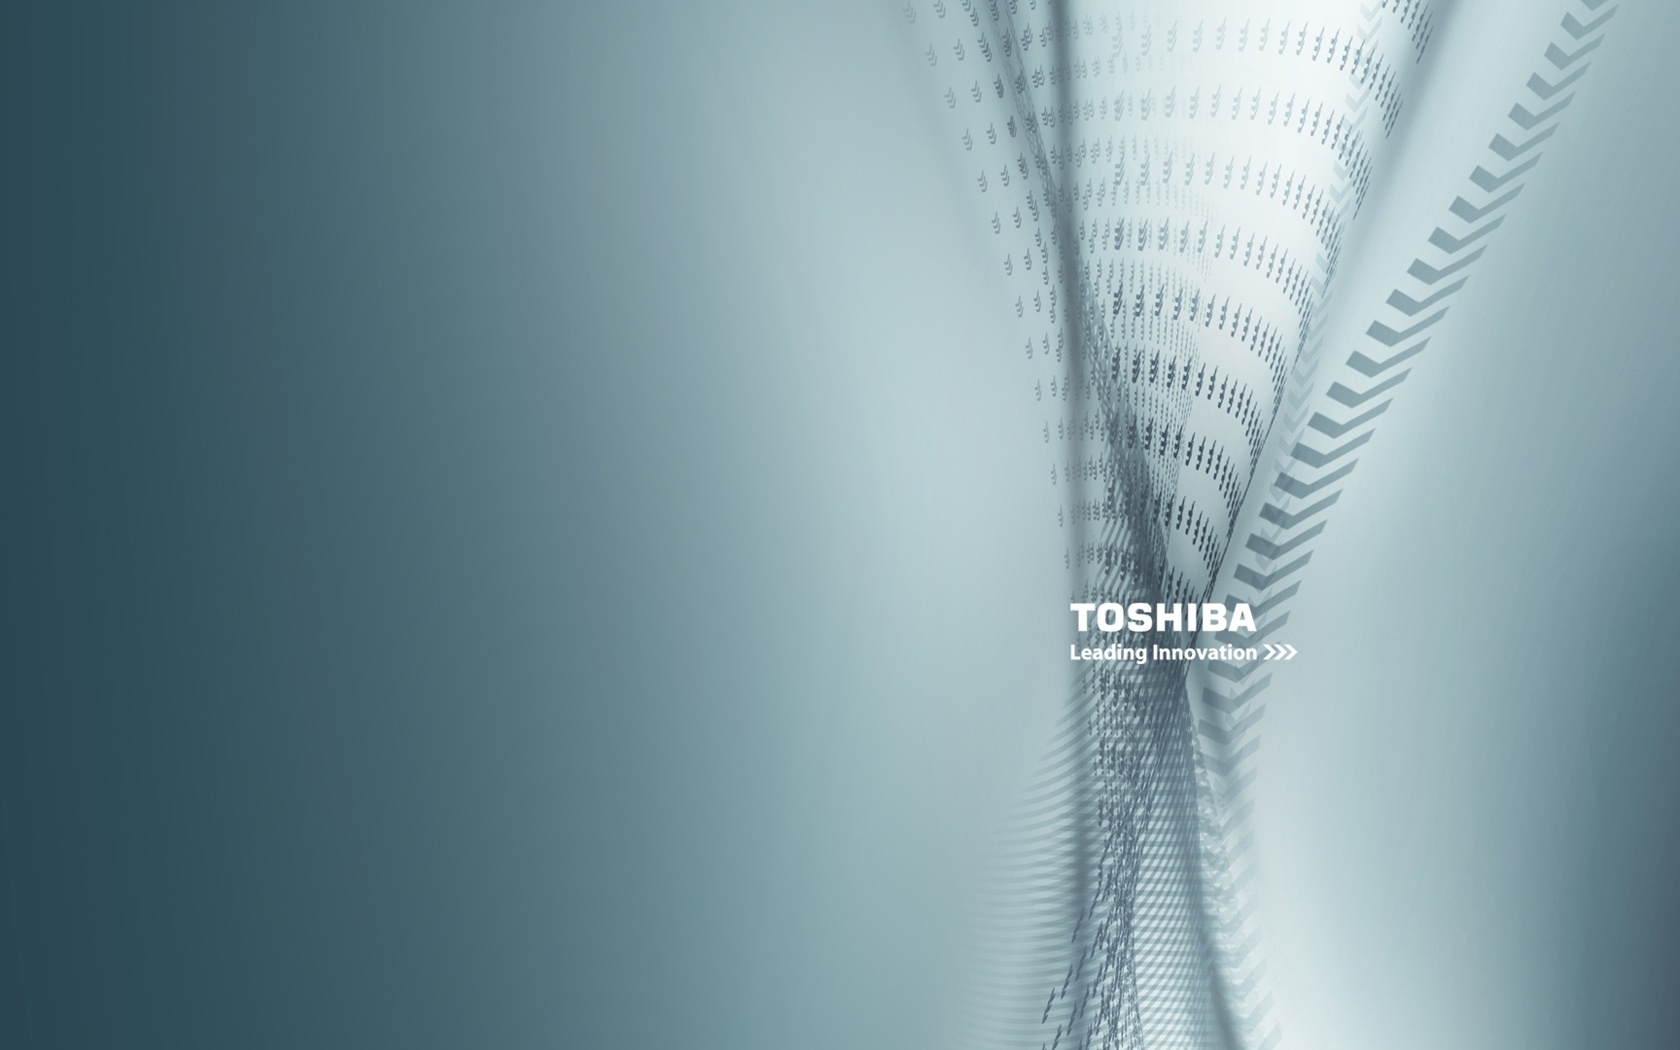 Toshiba Innovation for 1680 x 1050 widescreen resolution